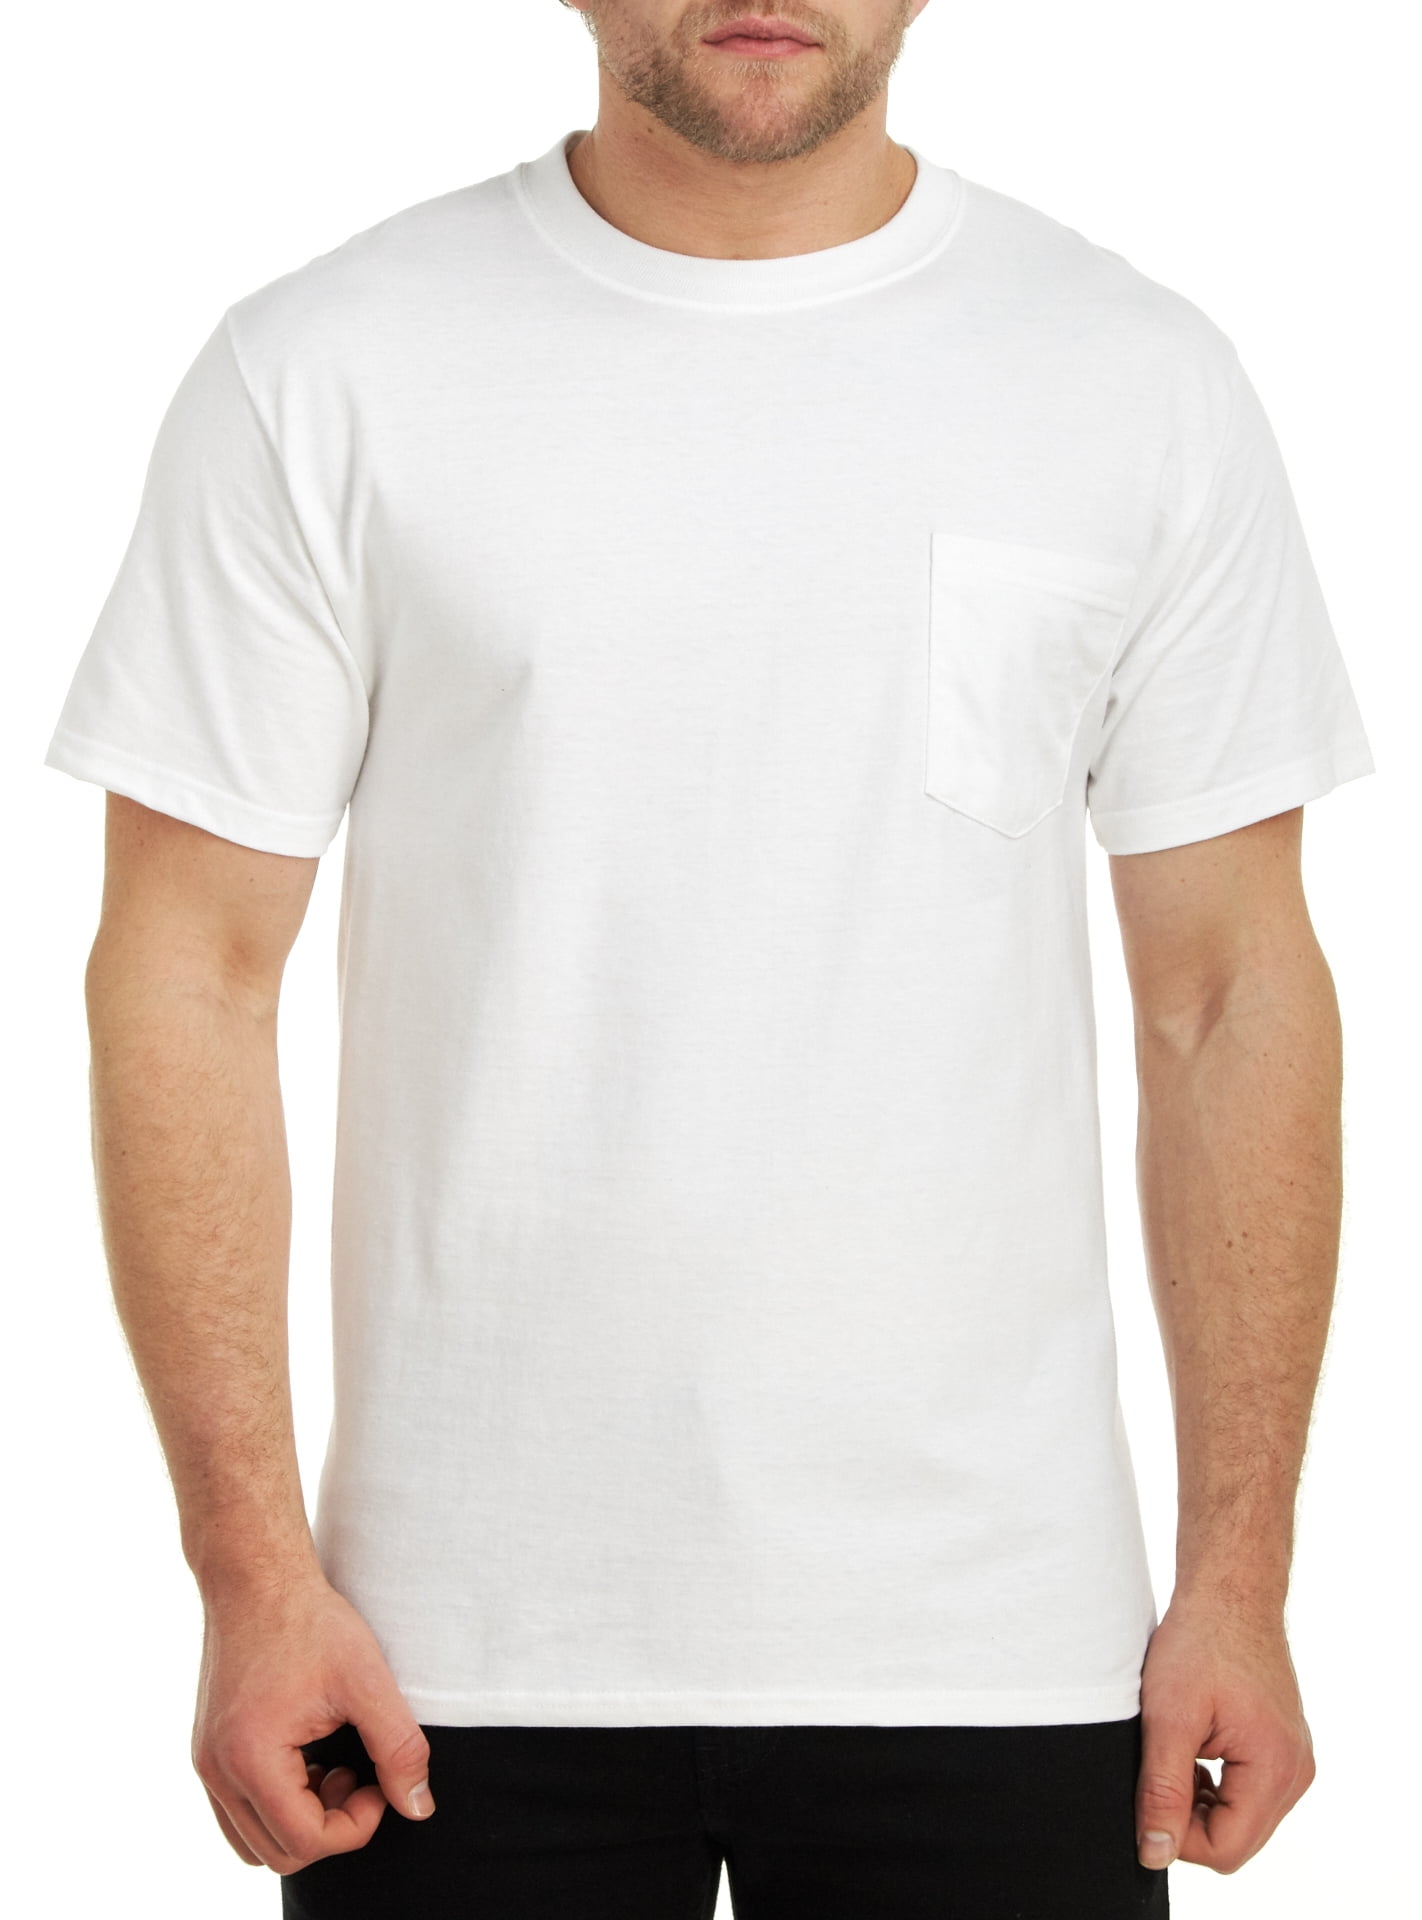 Hanes Men's Short Sleeve Beefy-T Pocket Cotton T-Shirts, White, Large ...